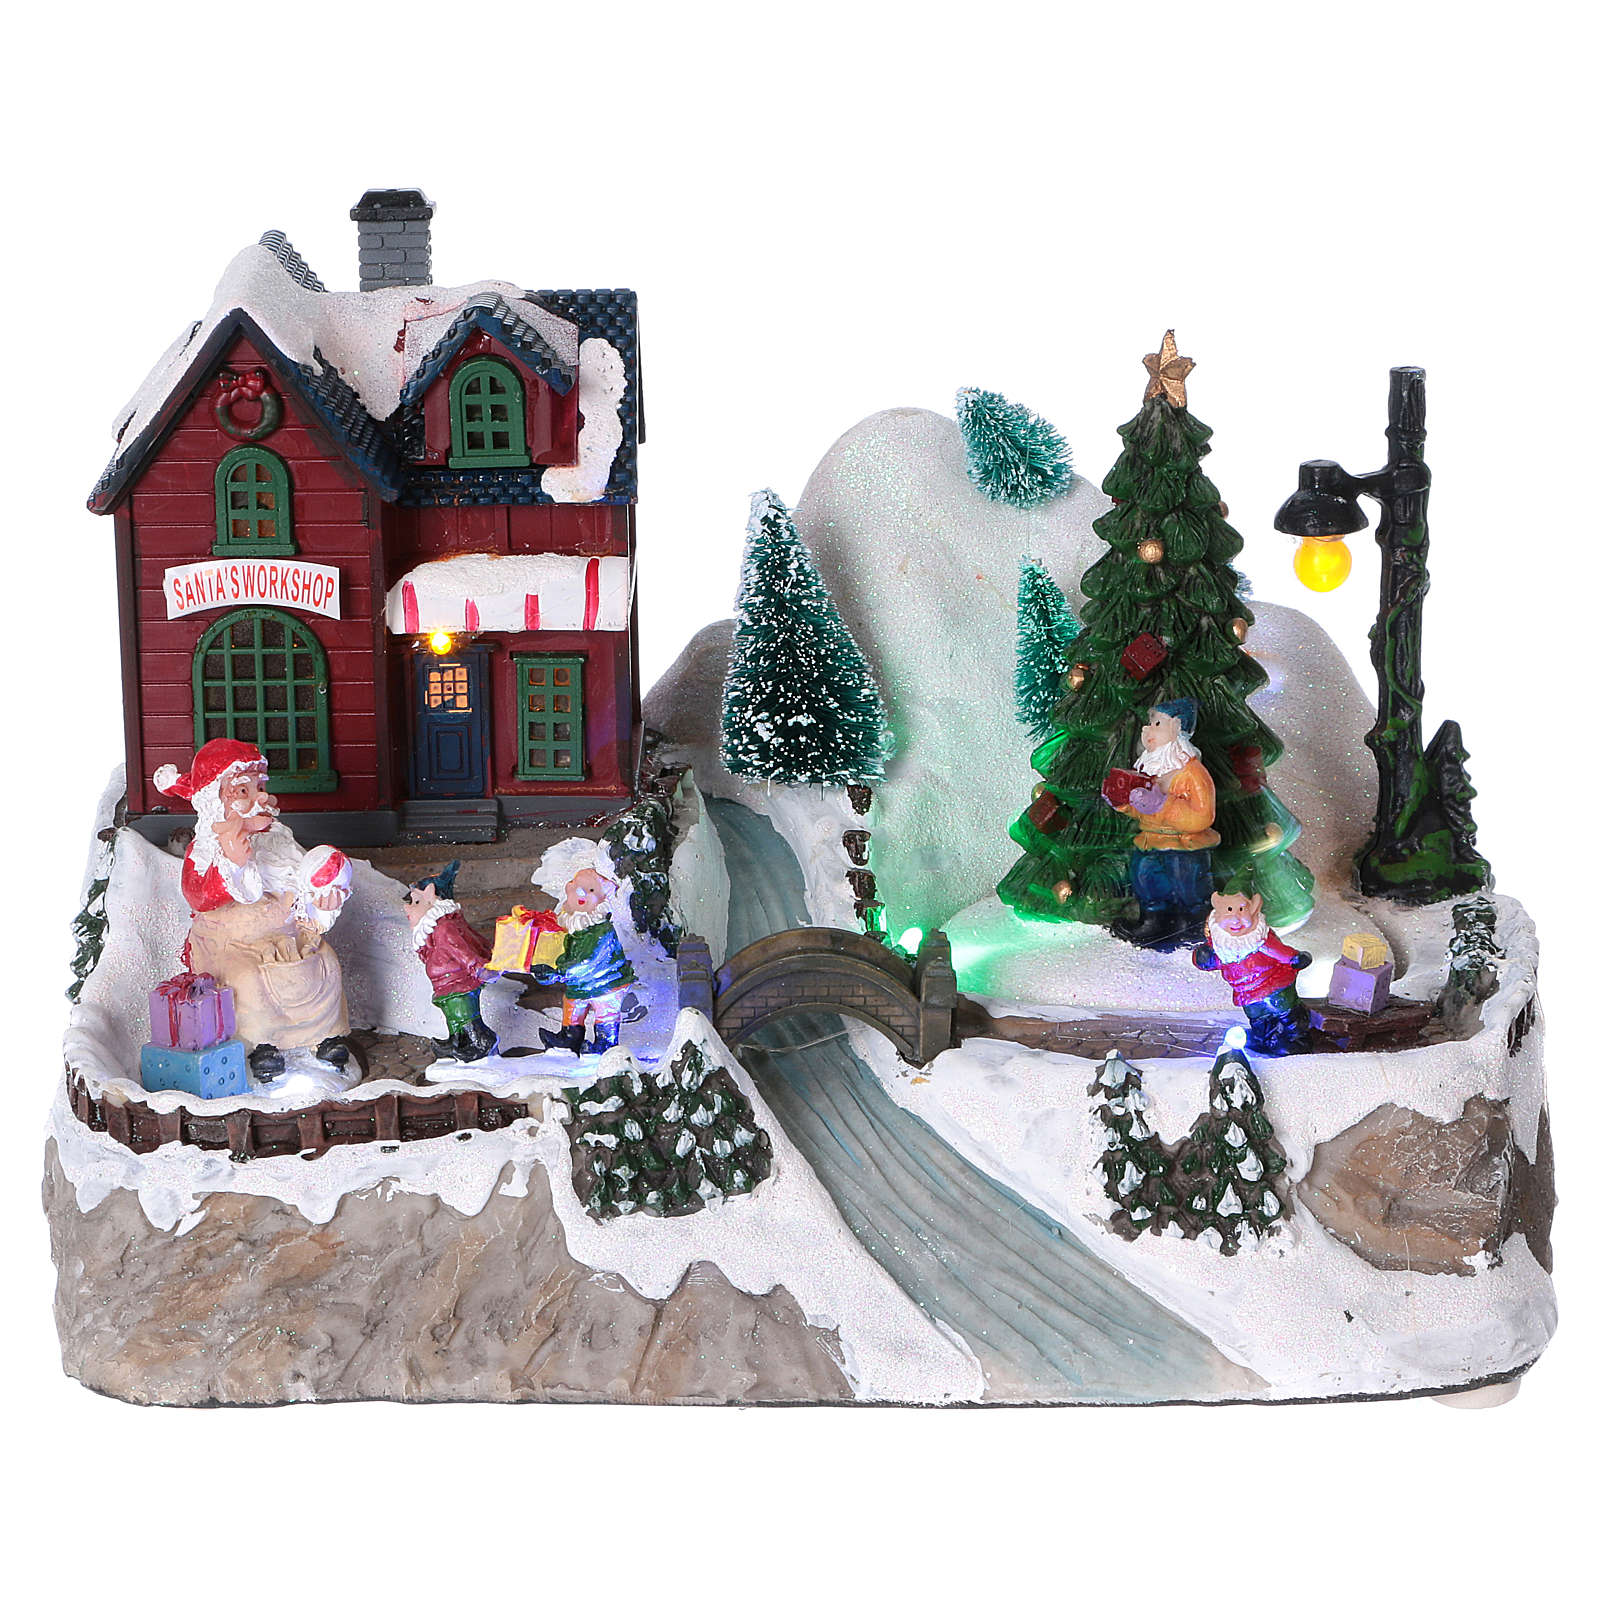 Illuminated Christmas village with animated tree and Santa | online ...